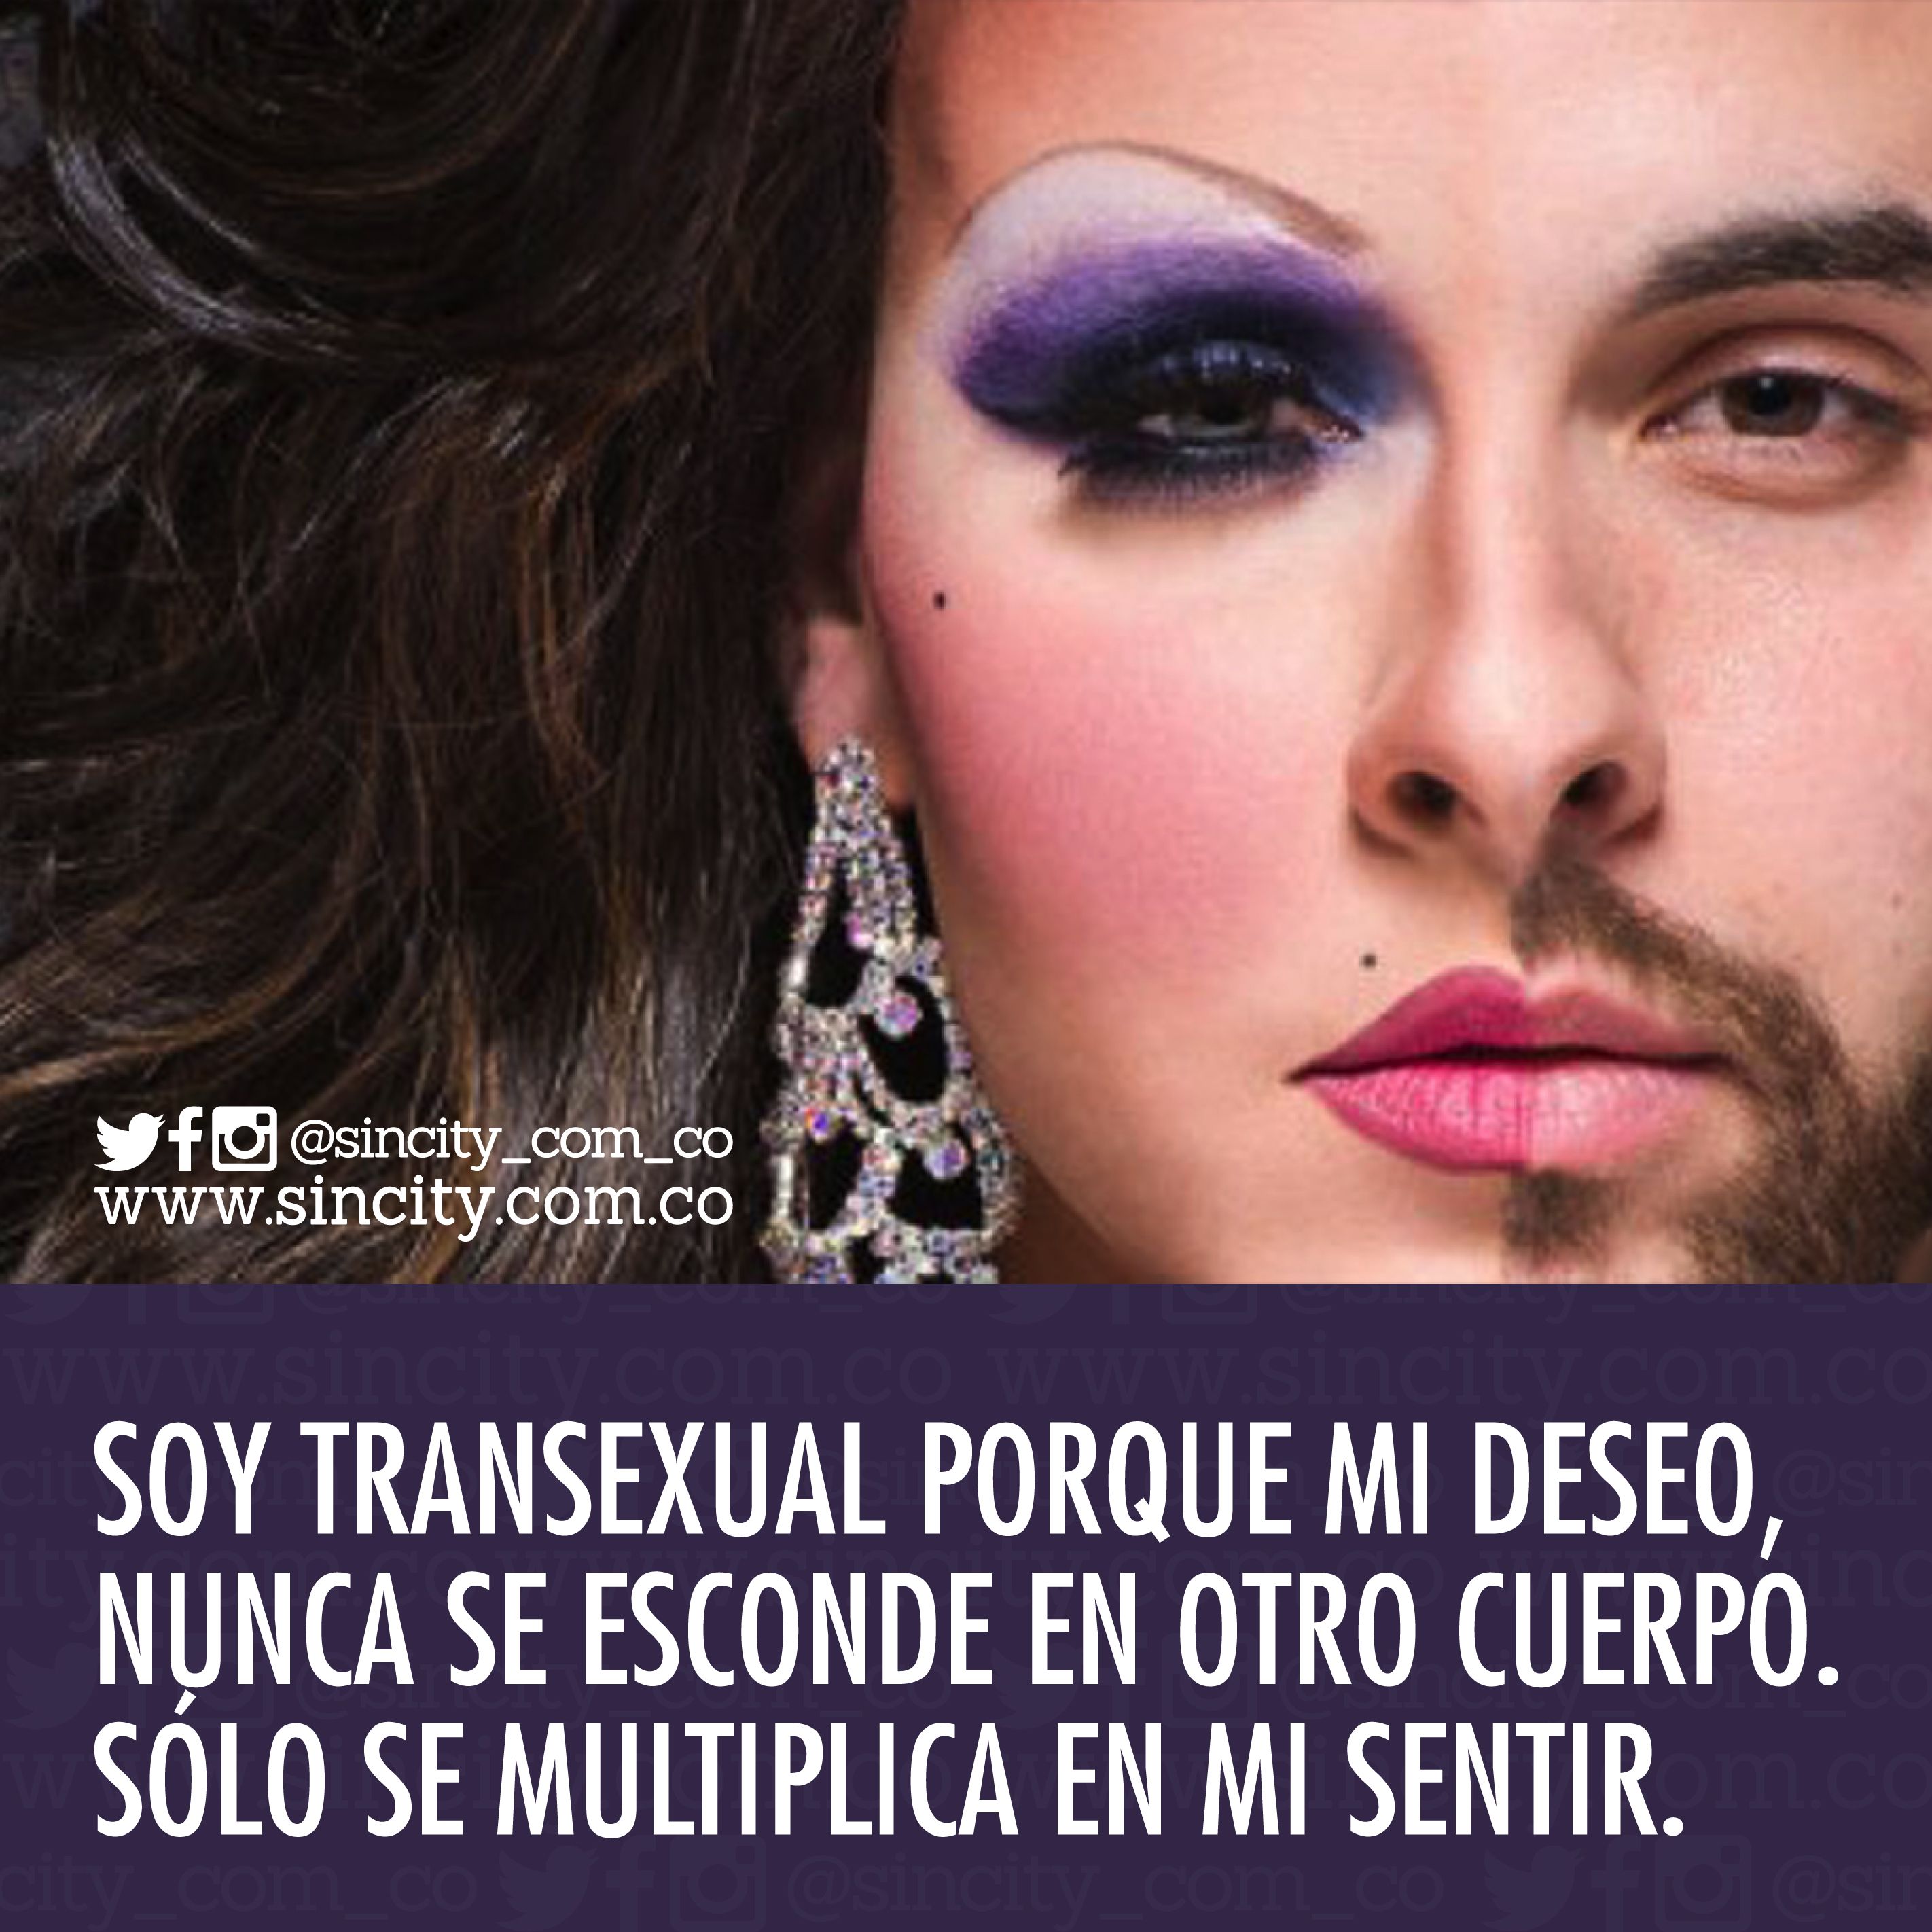 Photo gratuity de transsexual